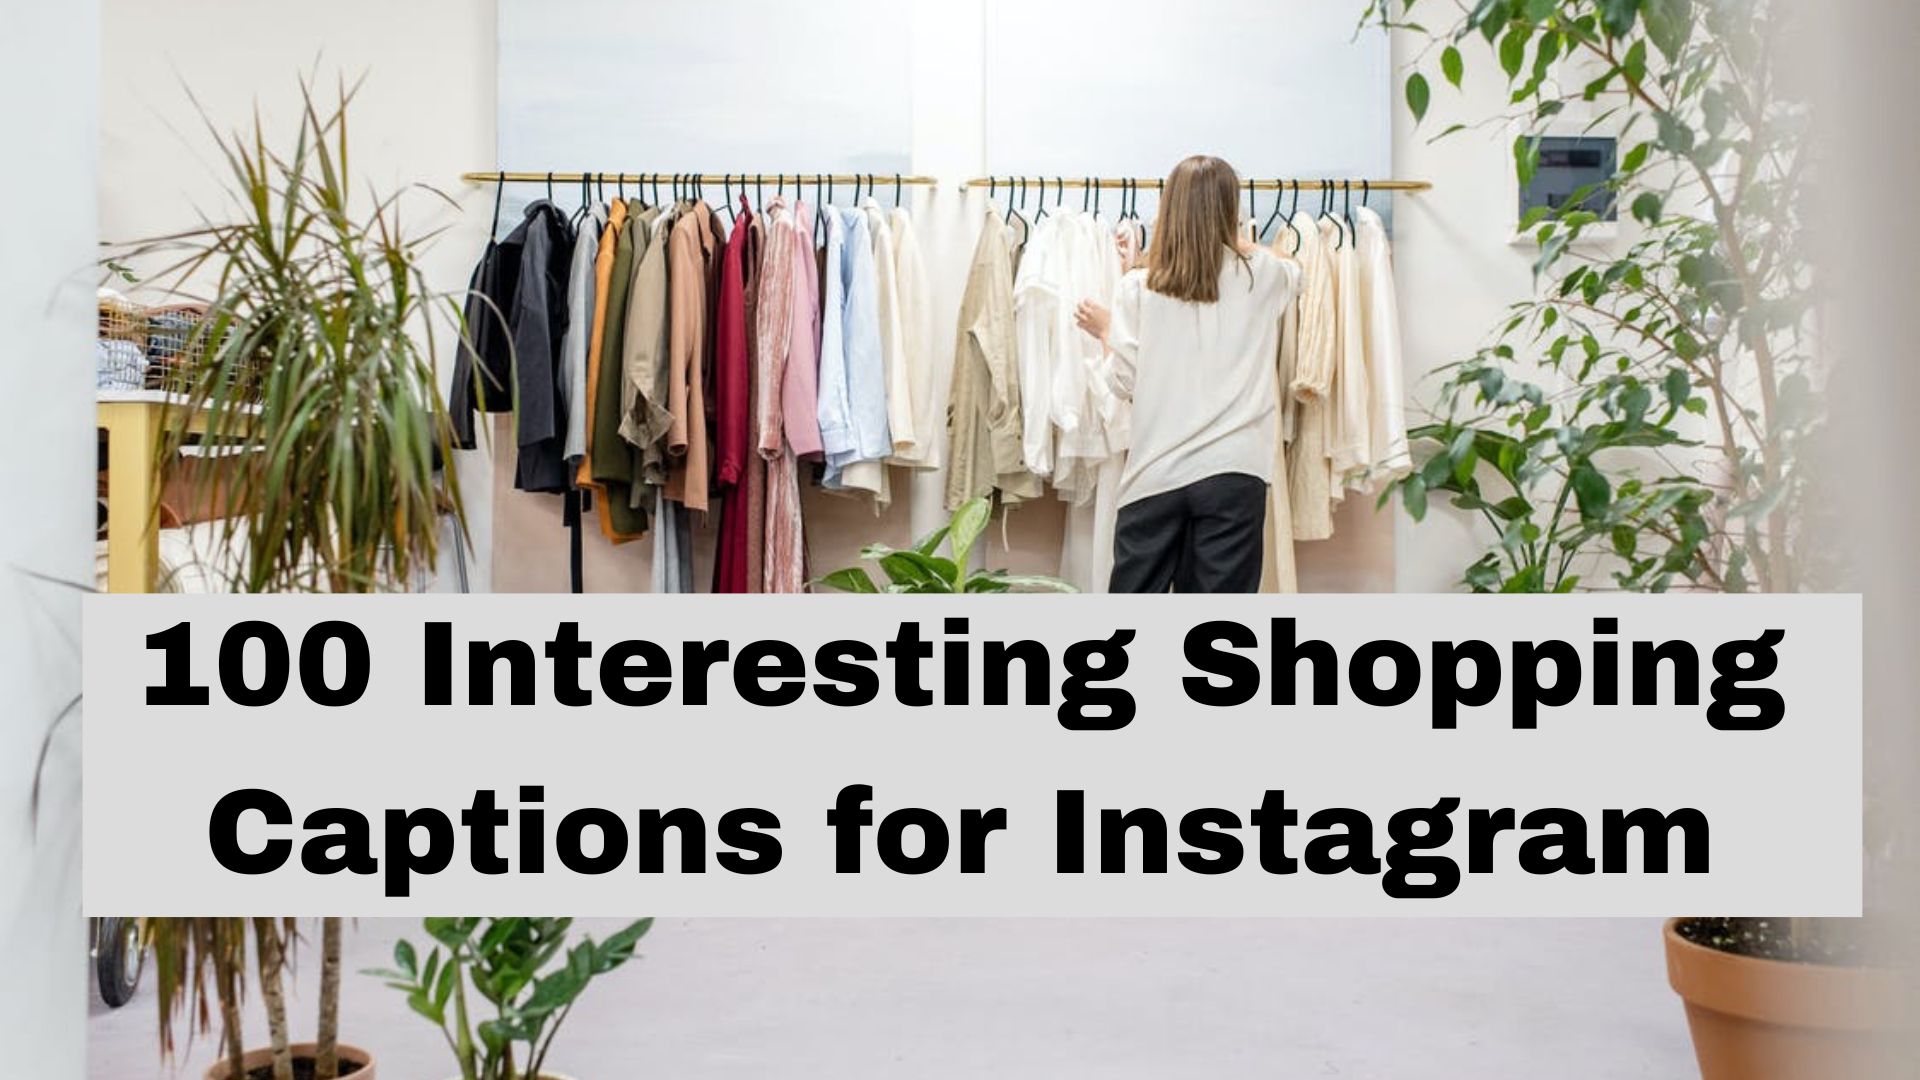 Interesting Shopping Captions for Instagram